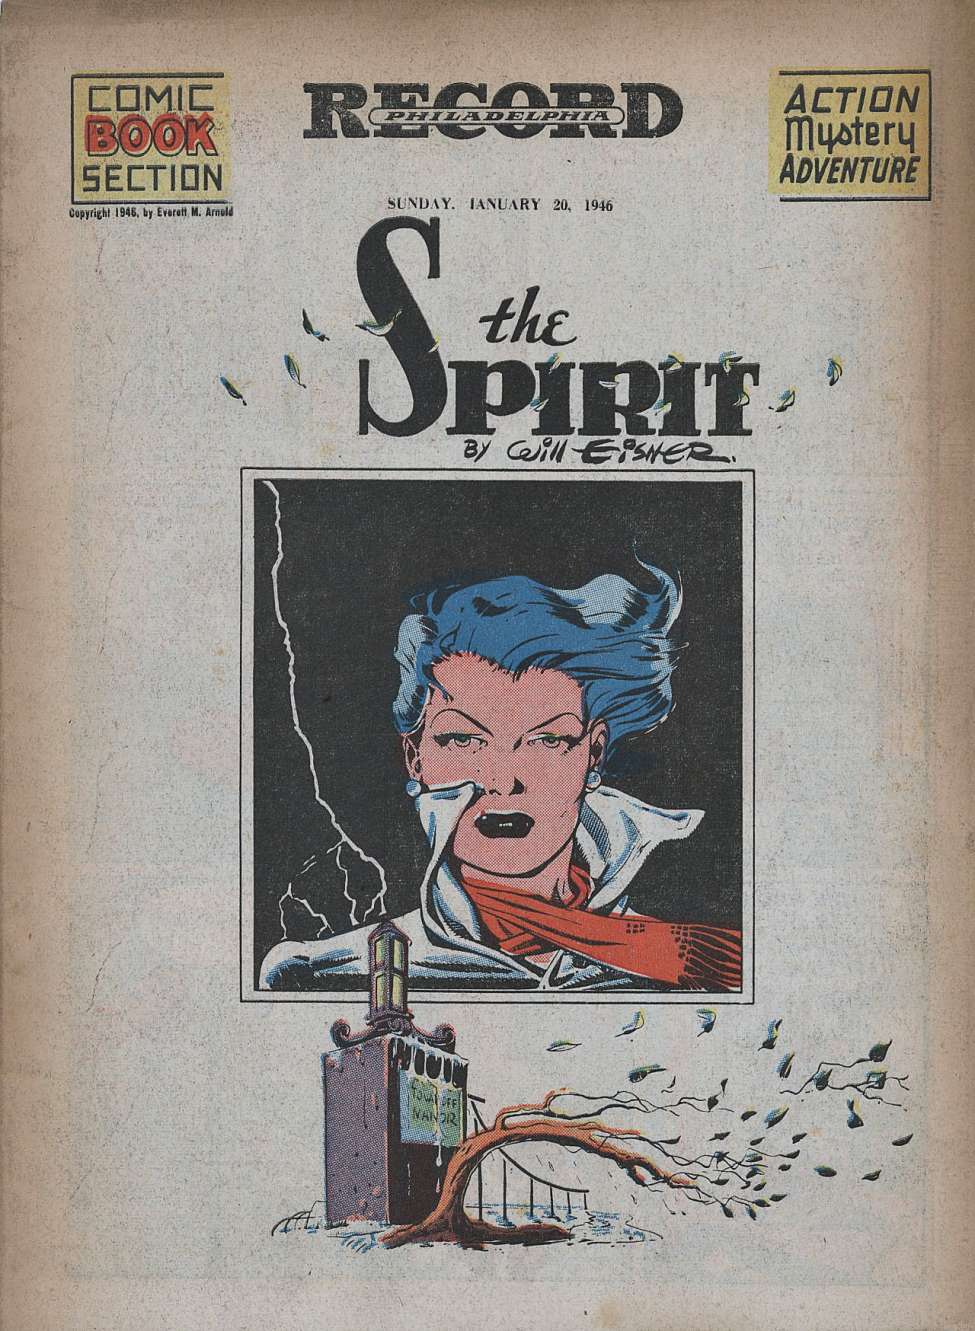 Comic Book Cover For The Spirit (1946-01-20) - Philadelphia Record - Version 2